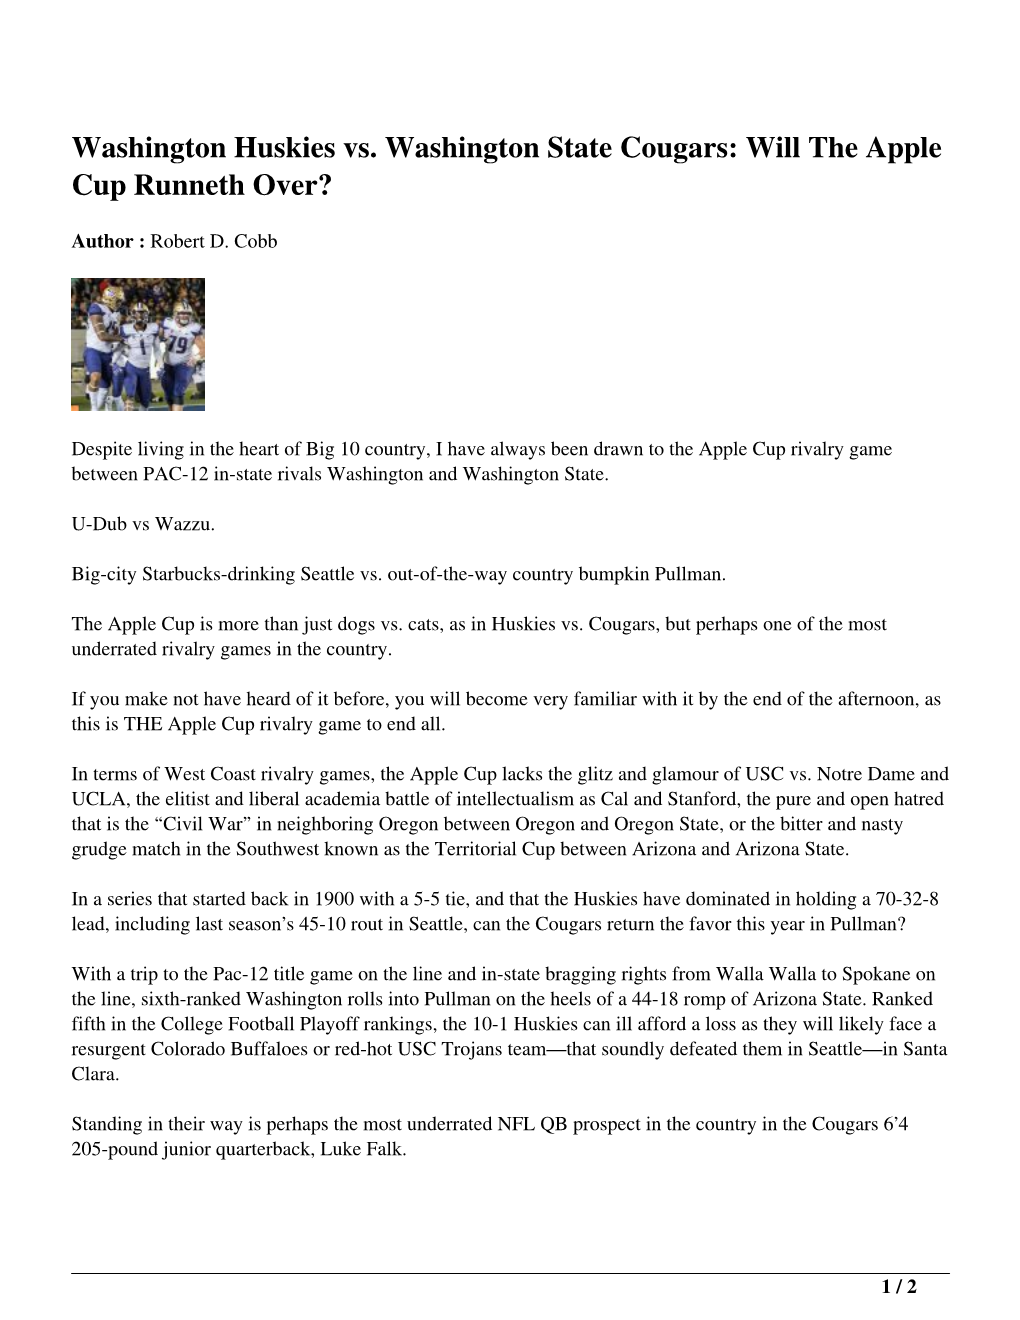 Washington Huskies Vs. Washington State Cougars: Will the Apple Cup Runneth Over?